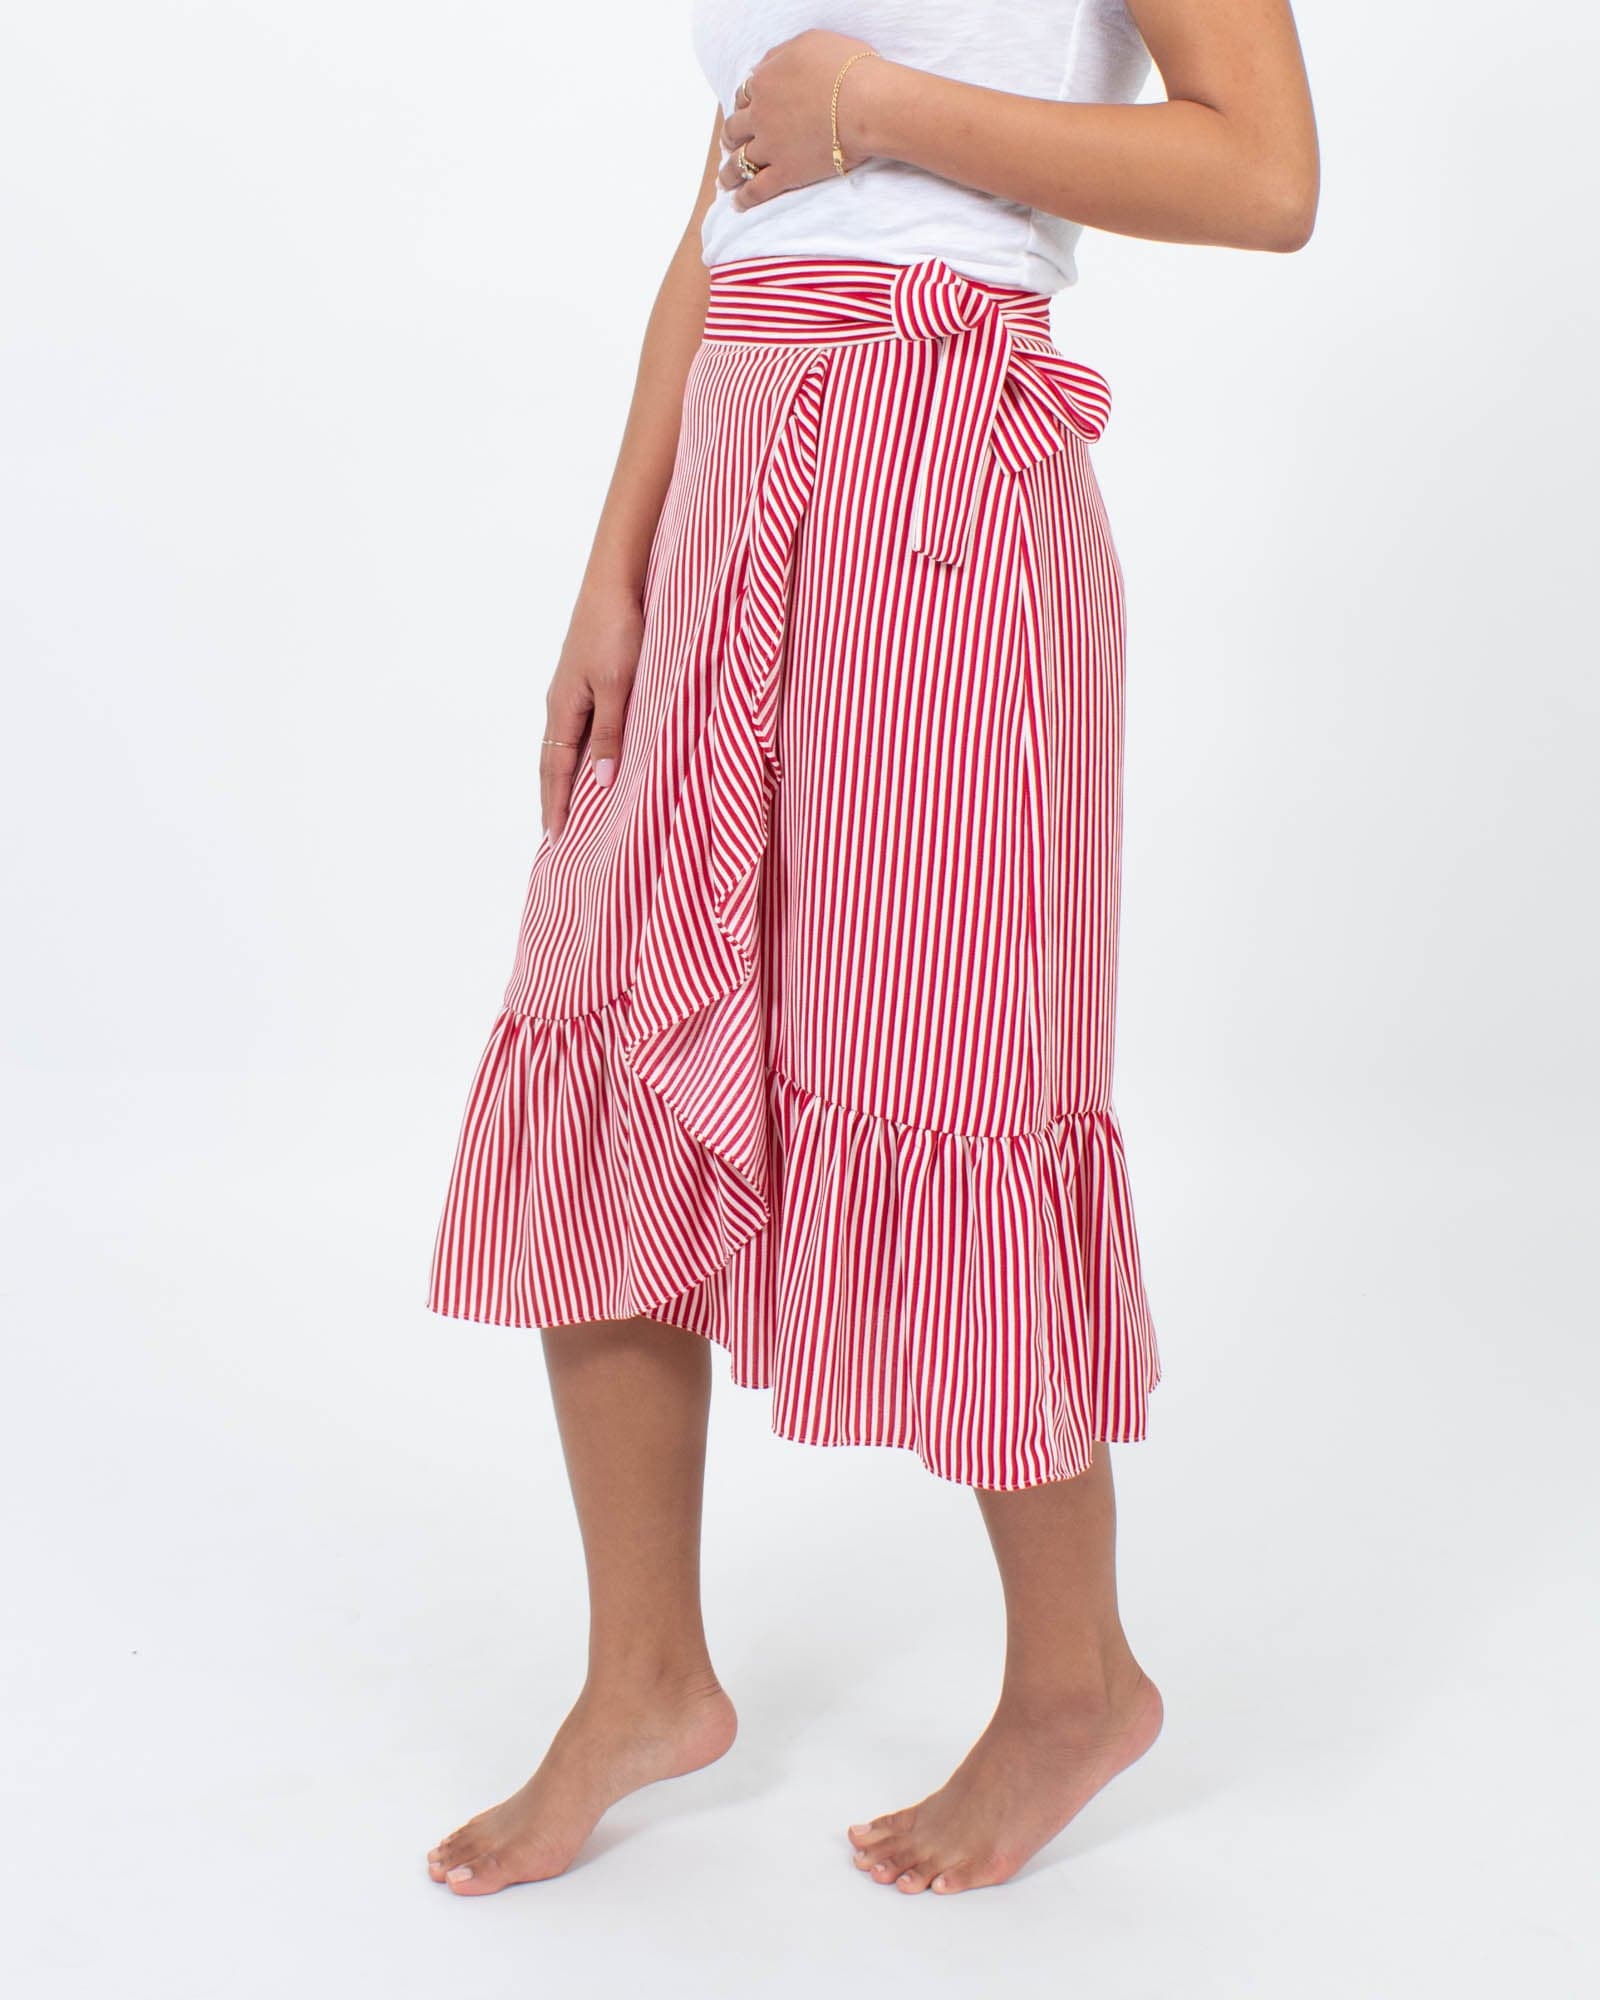 Erhvervelse Strengt skilsmisse Striped Wrap Skirt - The Revury